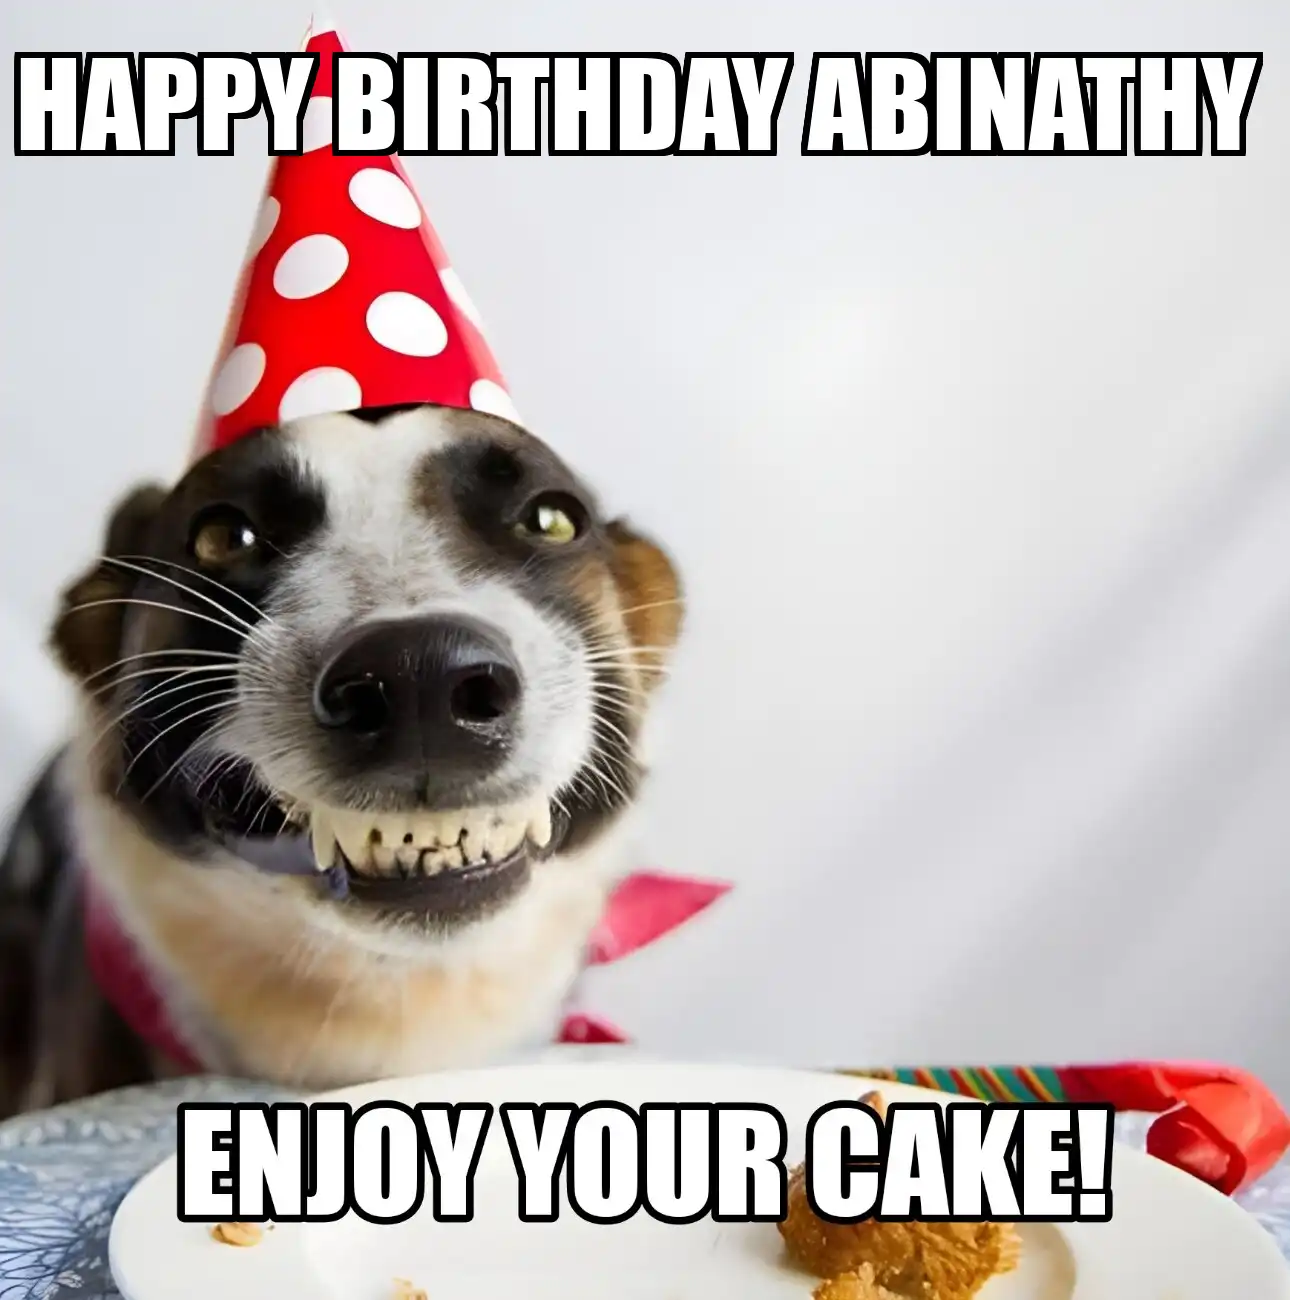 Happy Birthday Abinathy Enjoy Your Cake Dog Meme